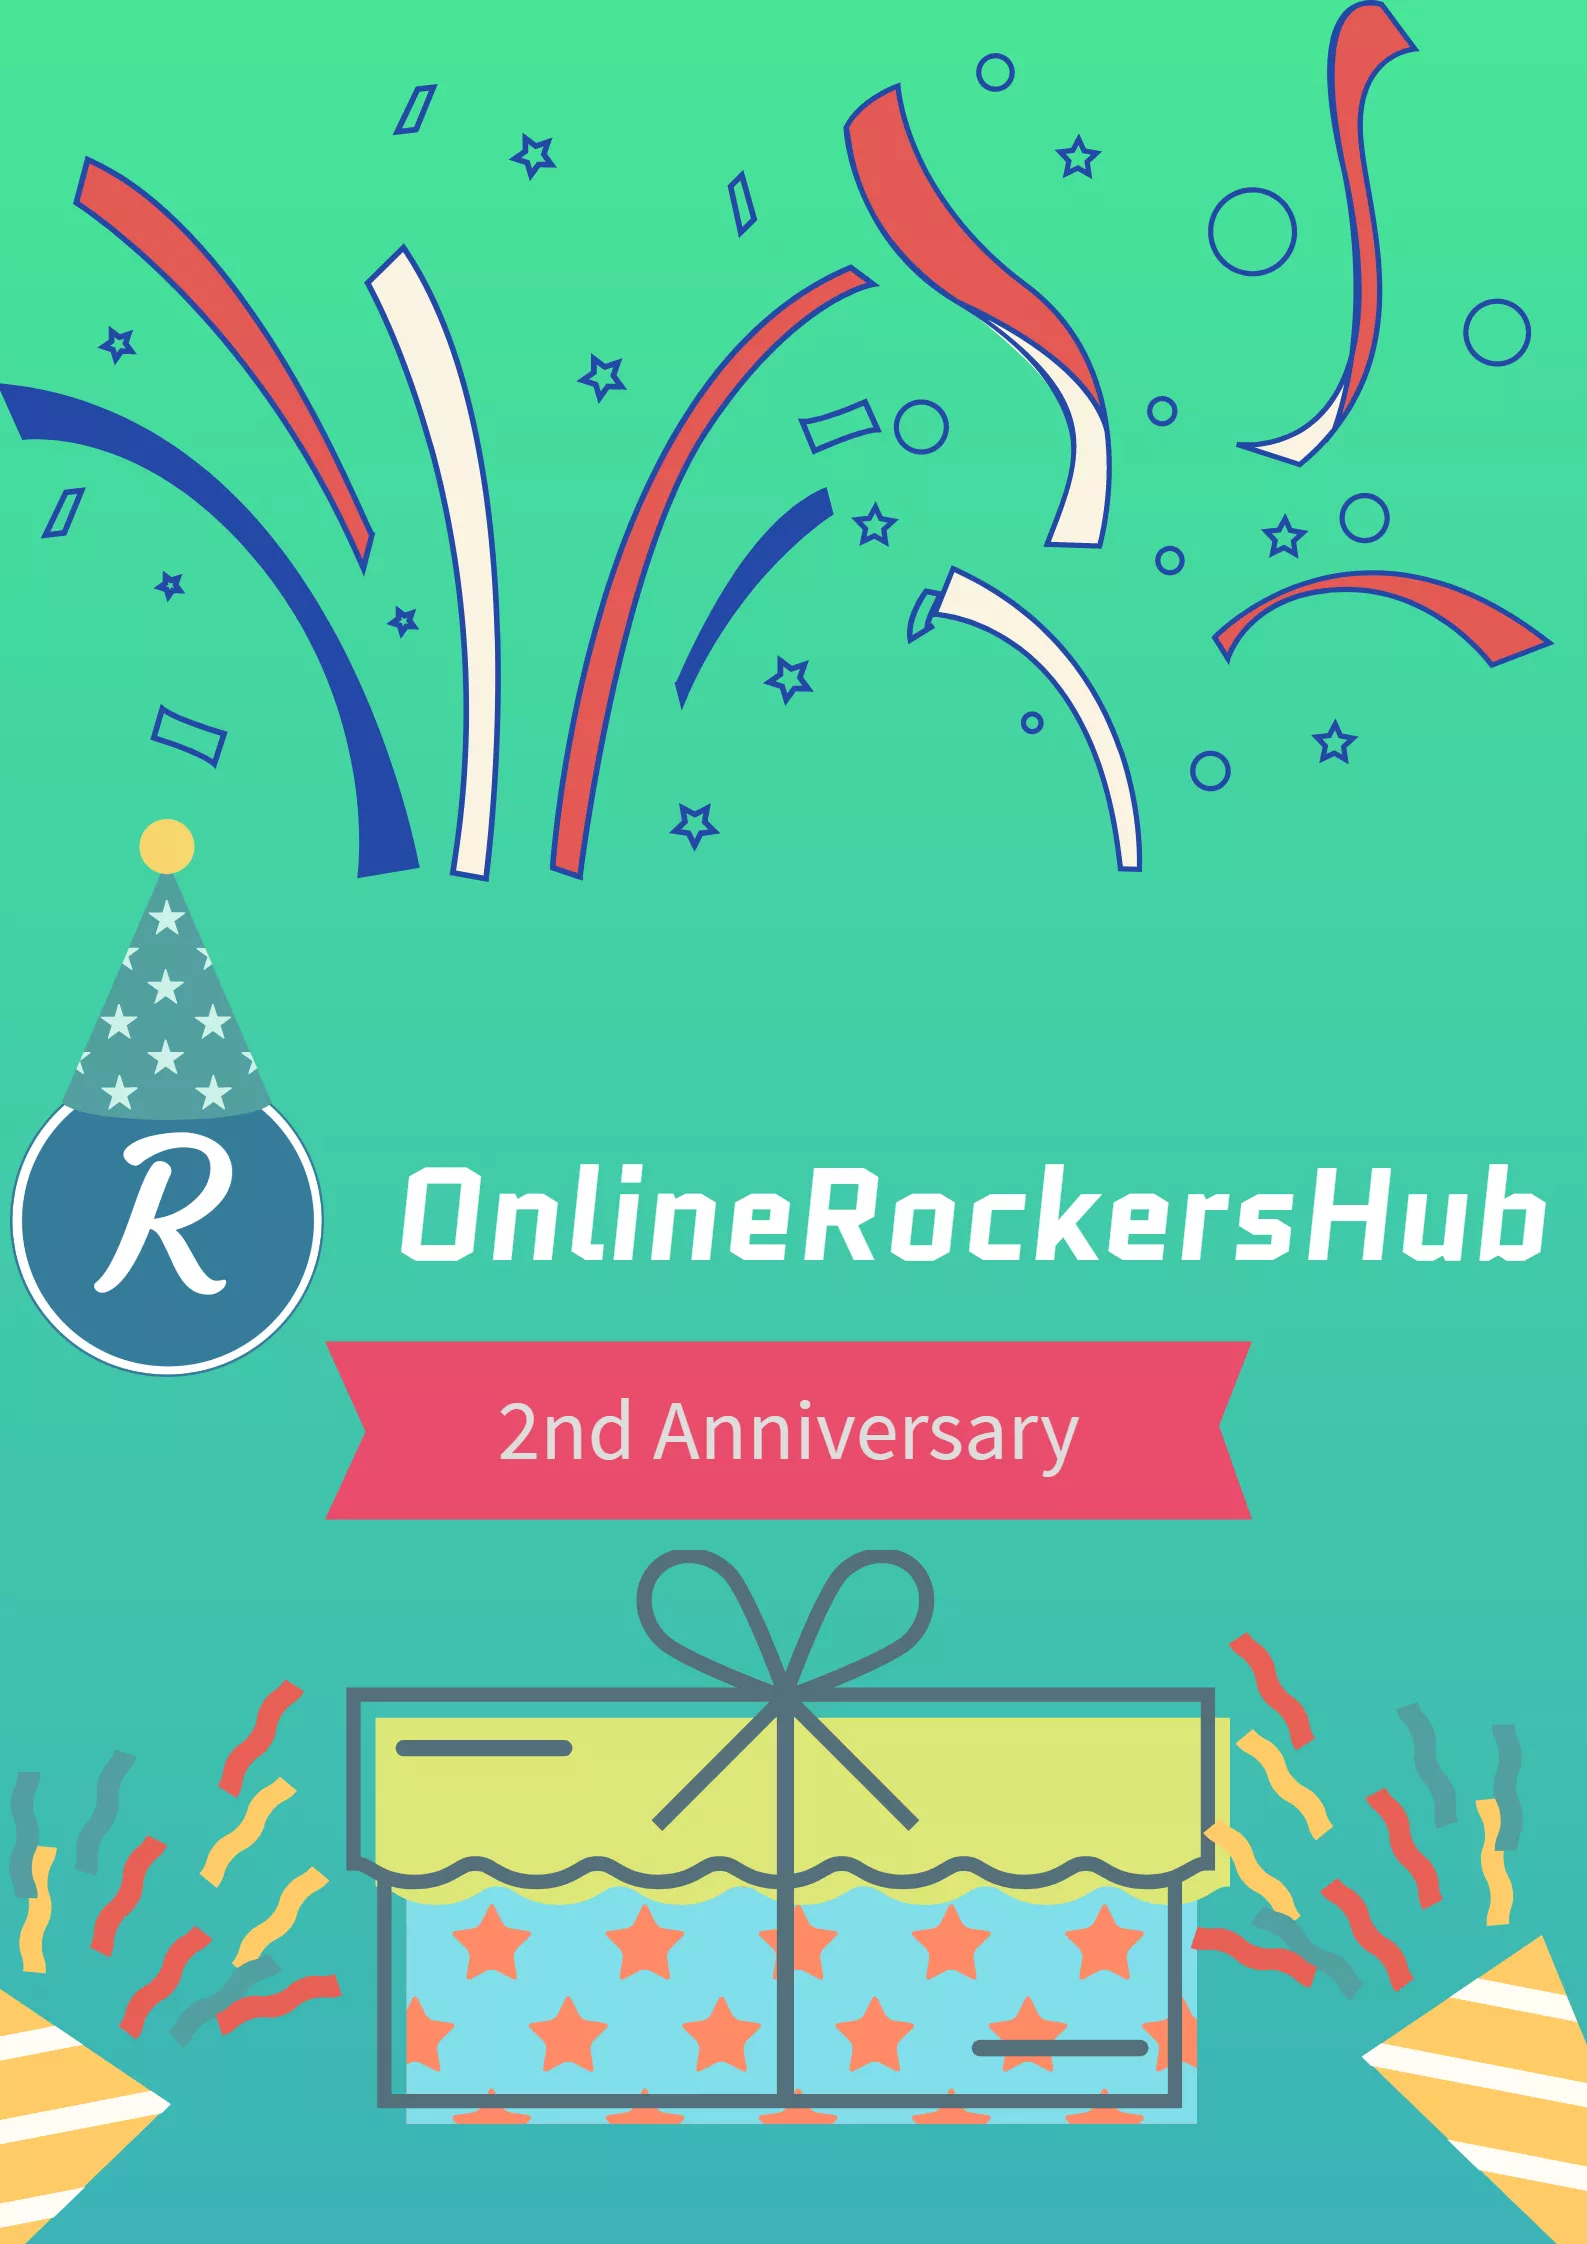 Happy 2nd anniversary onlinerockershub